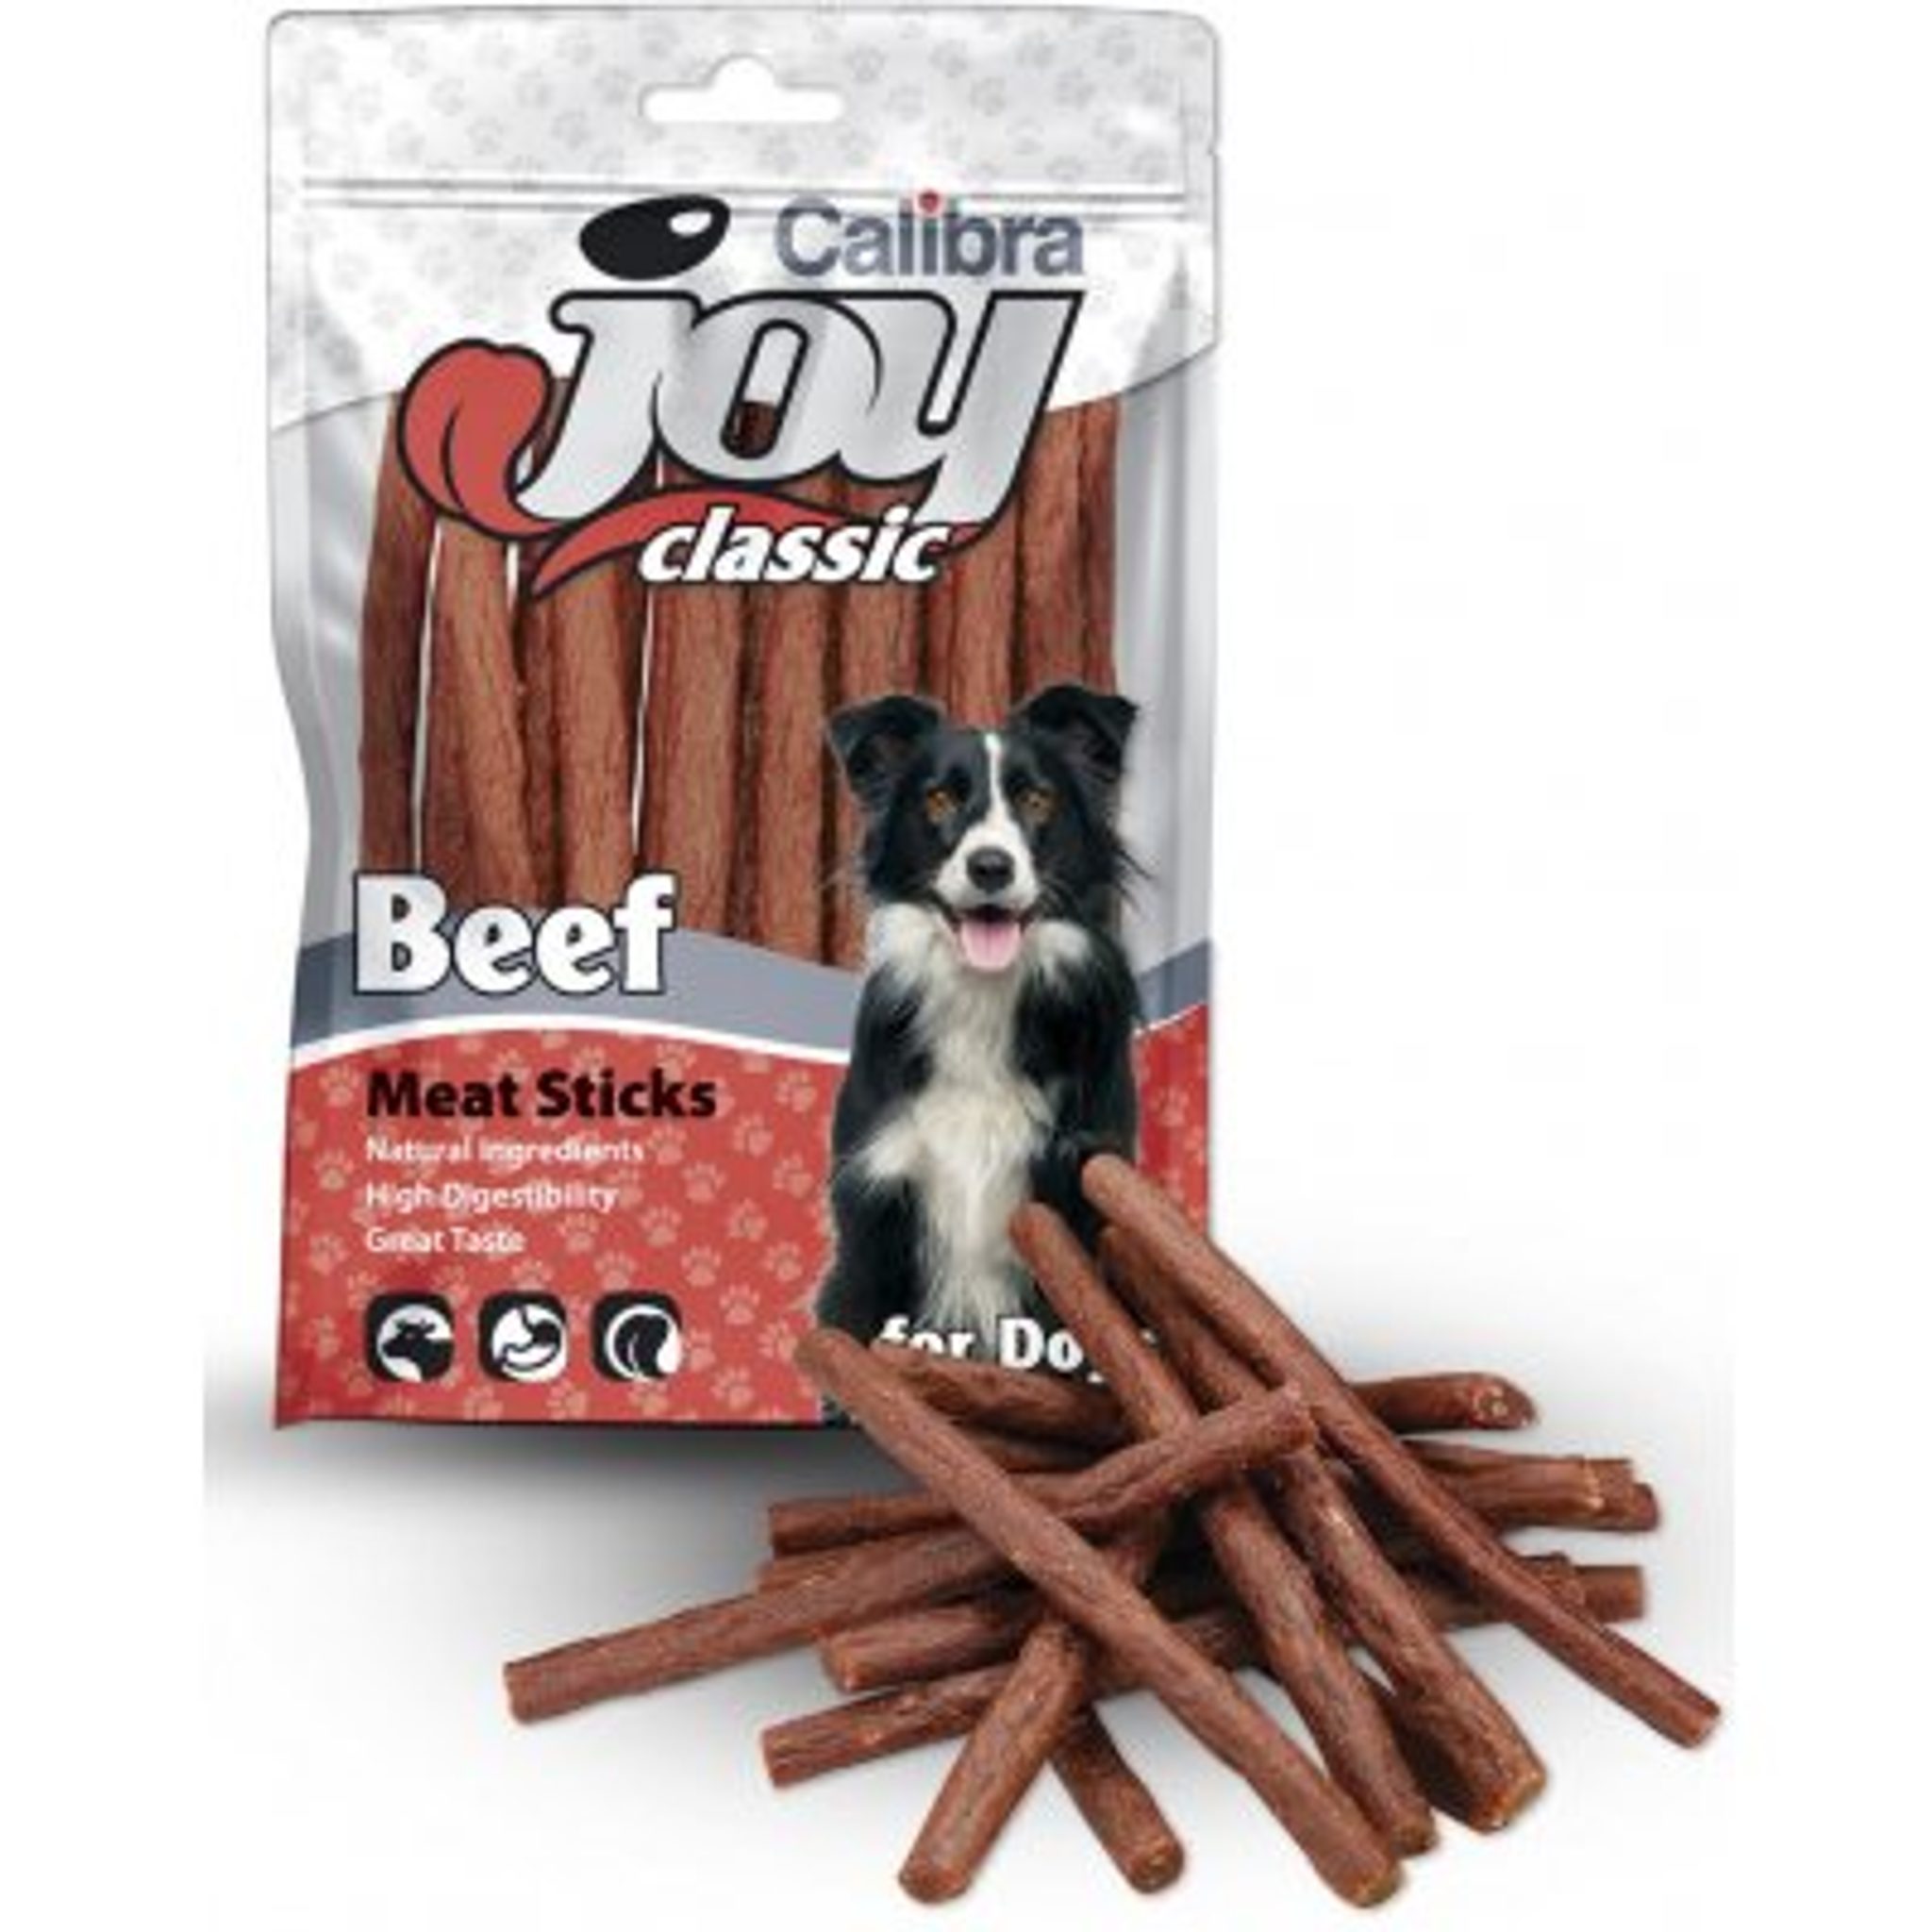 Calibra Joy Dog Classic Beef Sticks 80g NEW